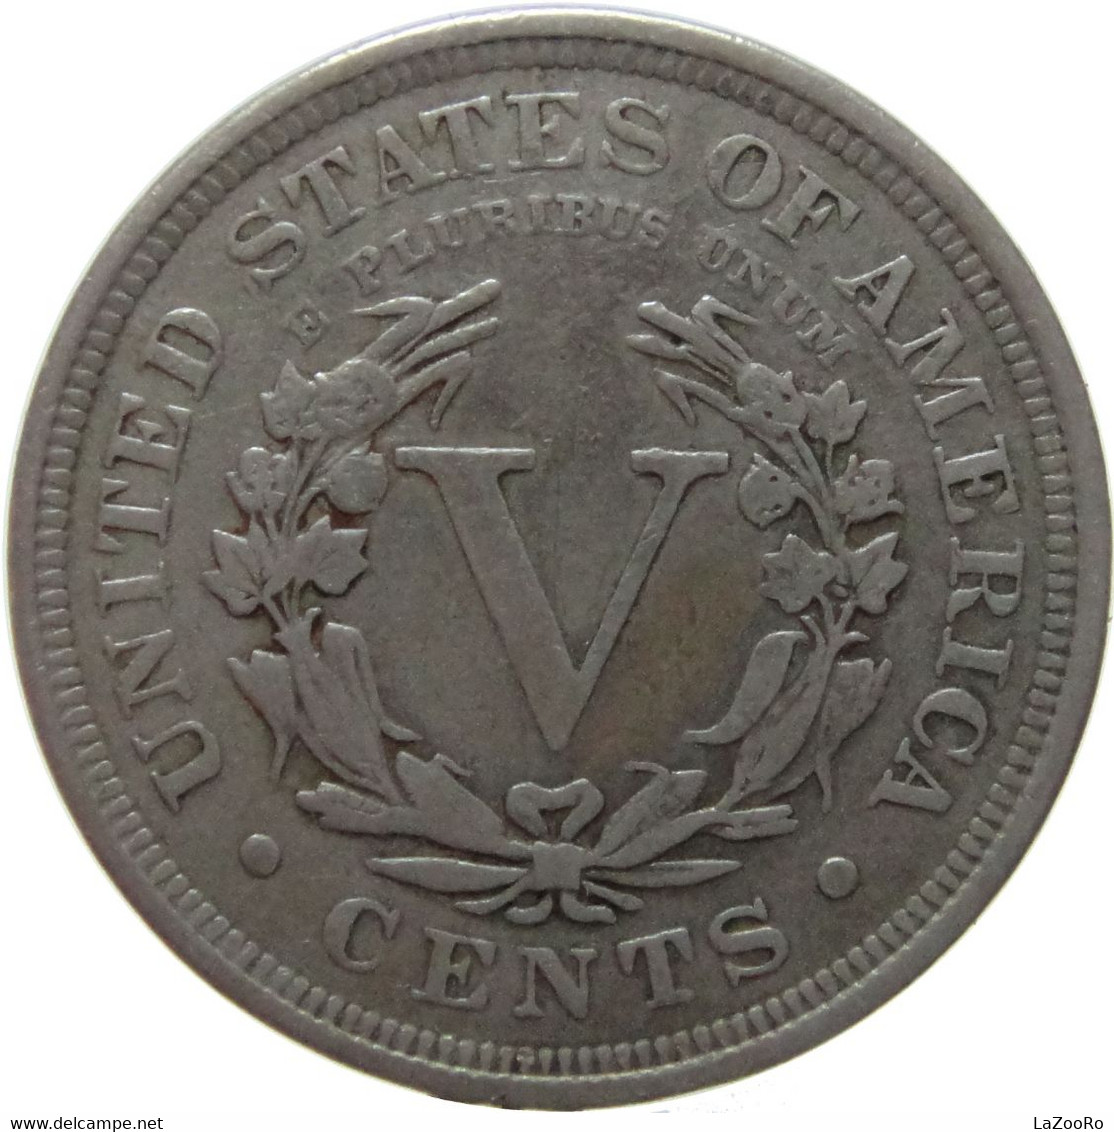 LaZooRo: United States 5 Cents 1902 XF - 1883-1913: Liberty